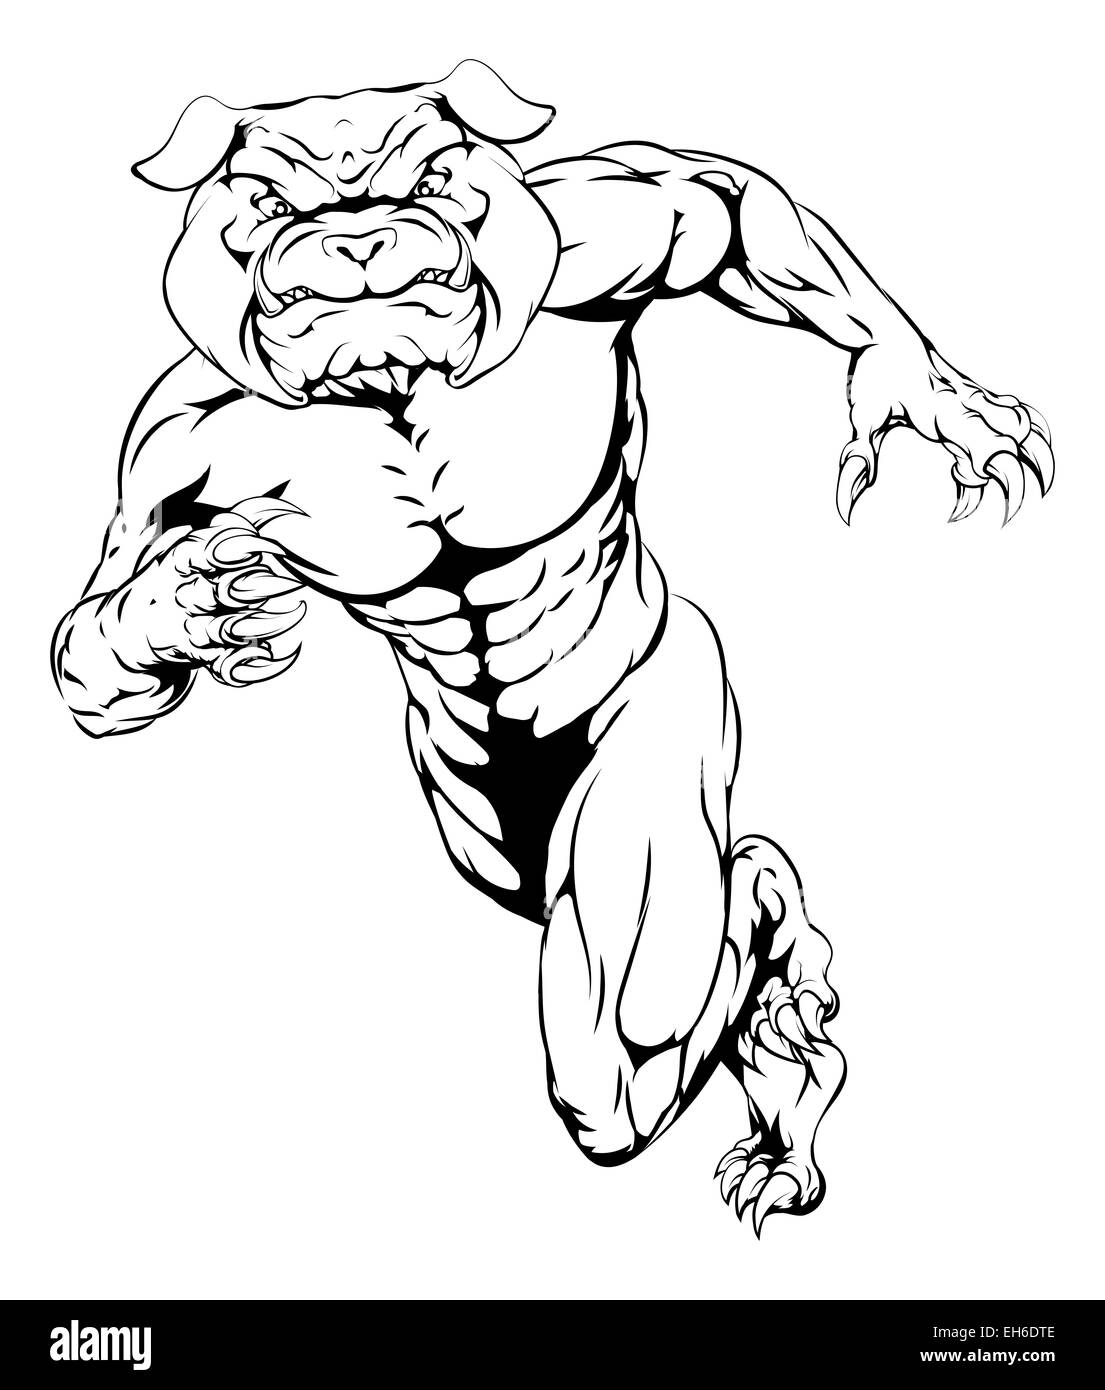 An illustration of a scary bulldog sports mascot sprinting Stock Photo